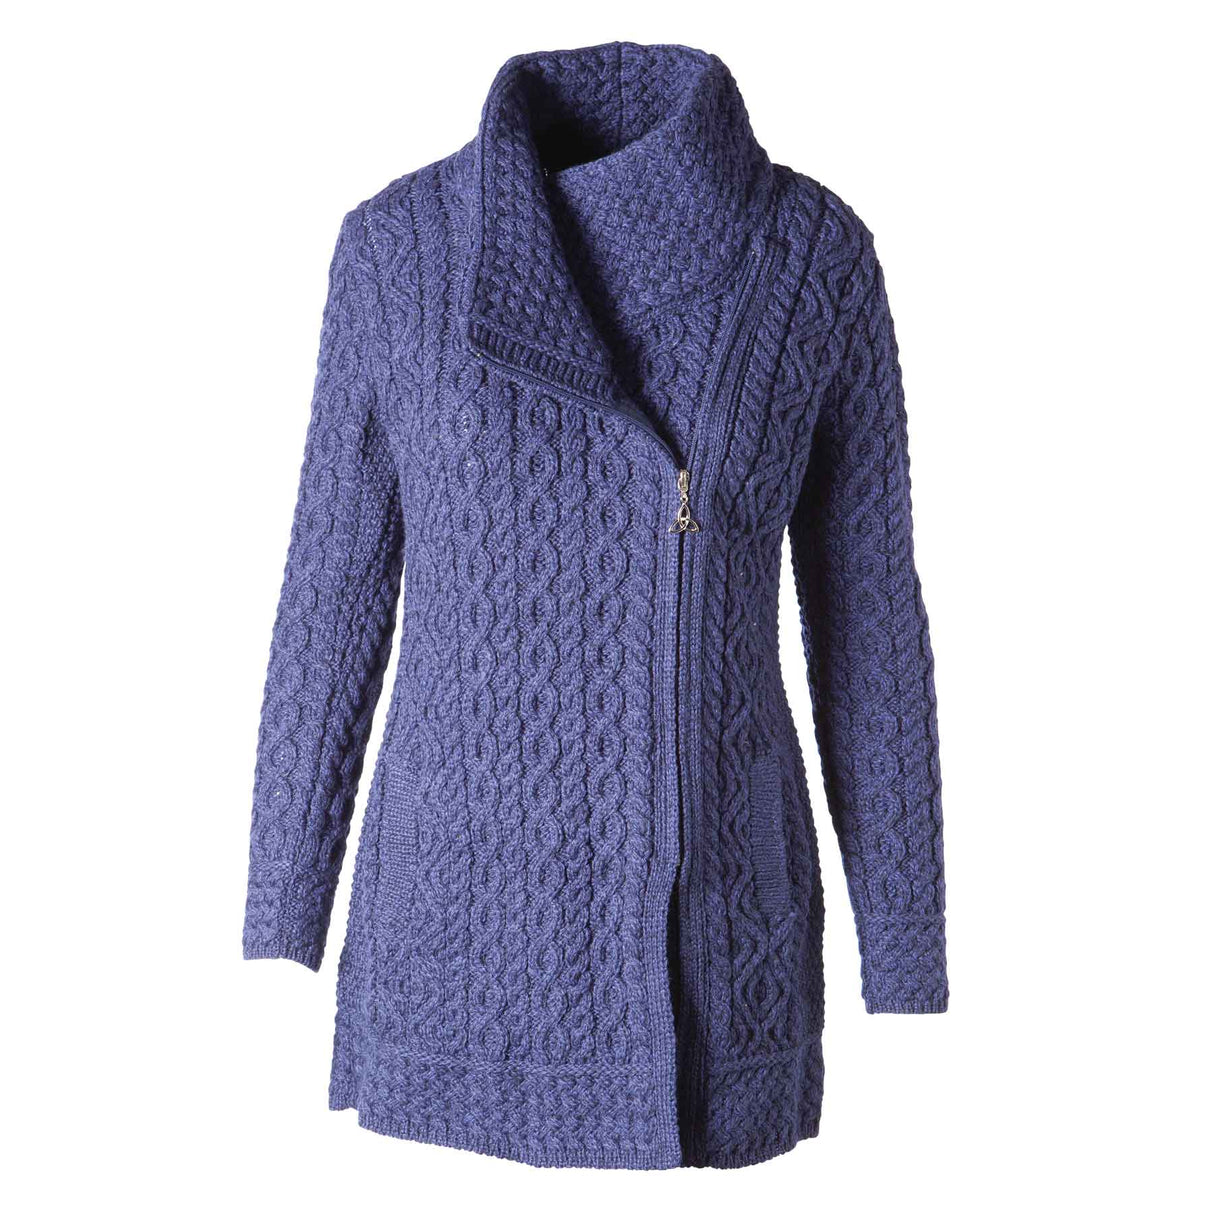 Side Zip Aran Knit Jacket with Shawl Collar, Midnight Blue - Creative Irish Gifts